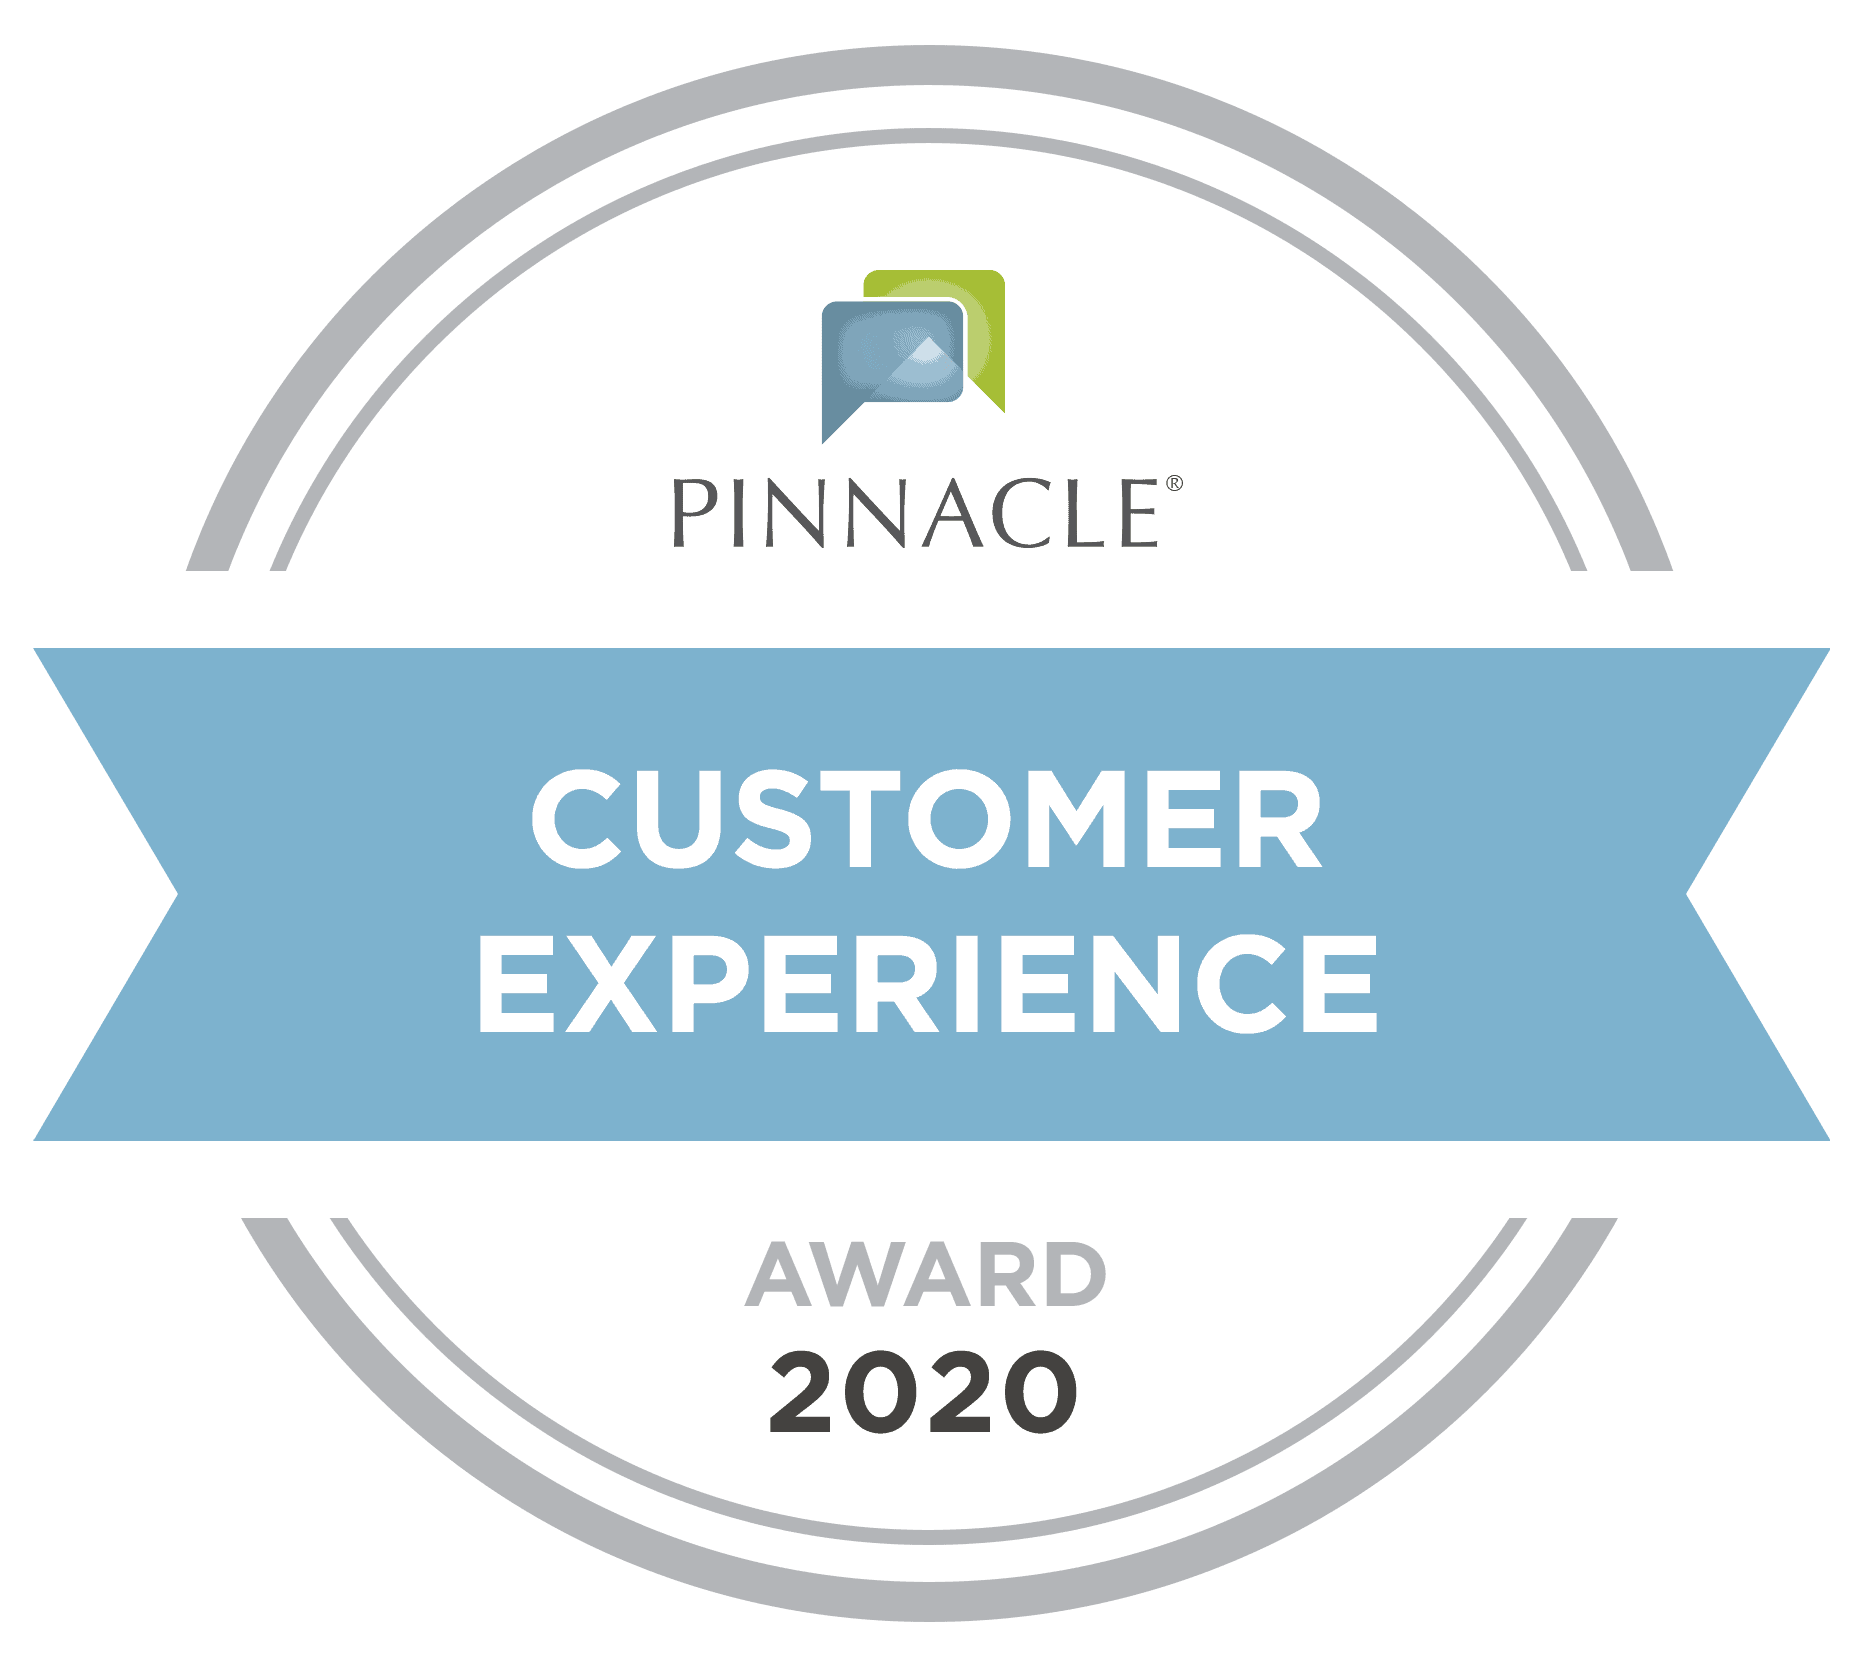 Pinnacle customer experience award 2020